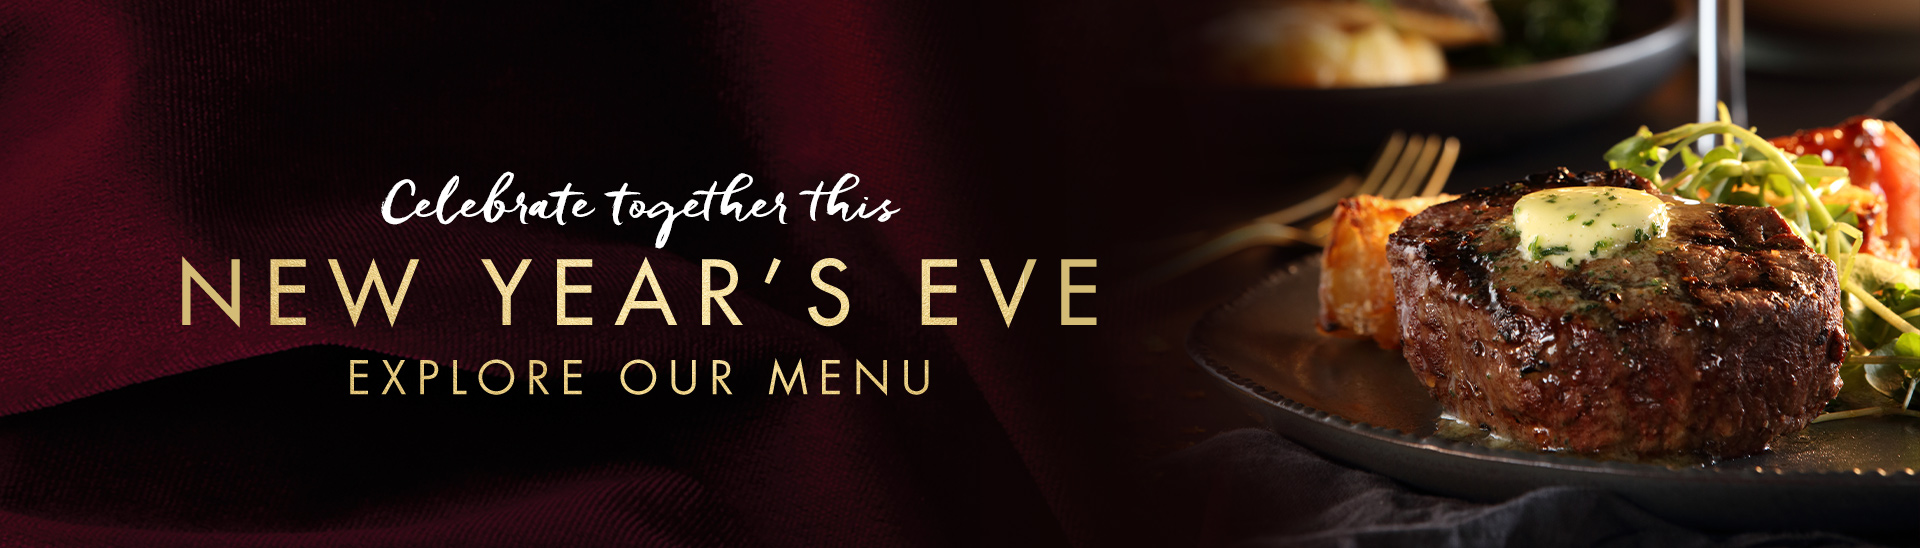 New Year’s eve menu at Miller & Carter Kidlington 